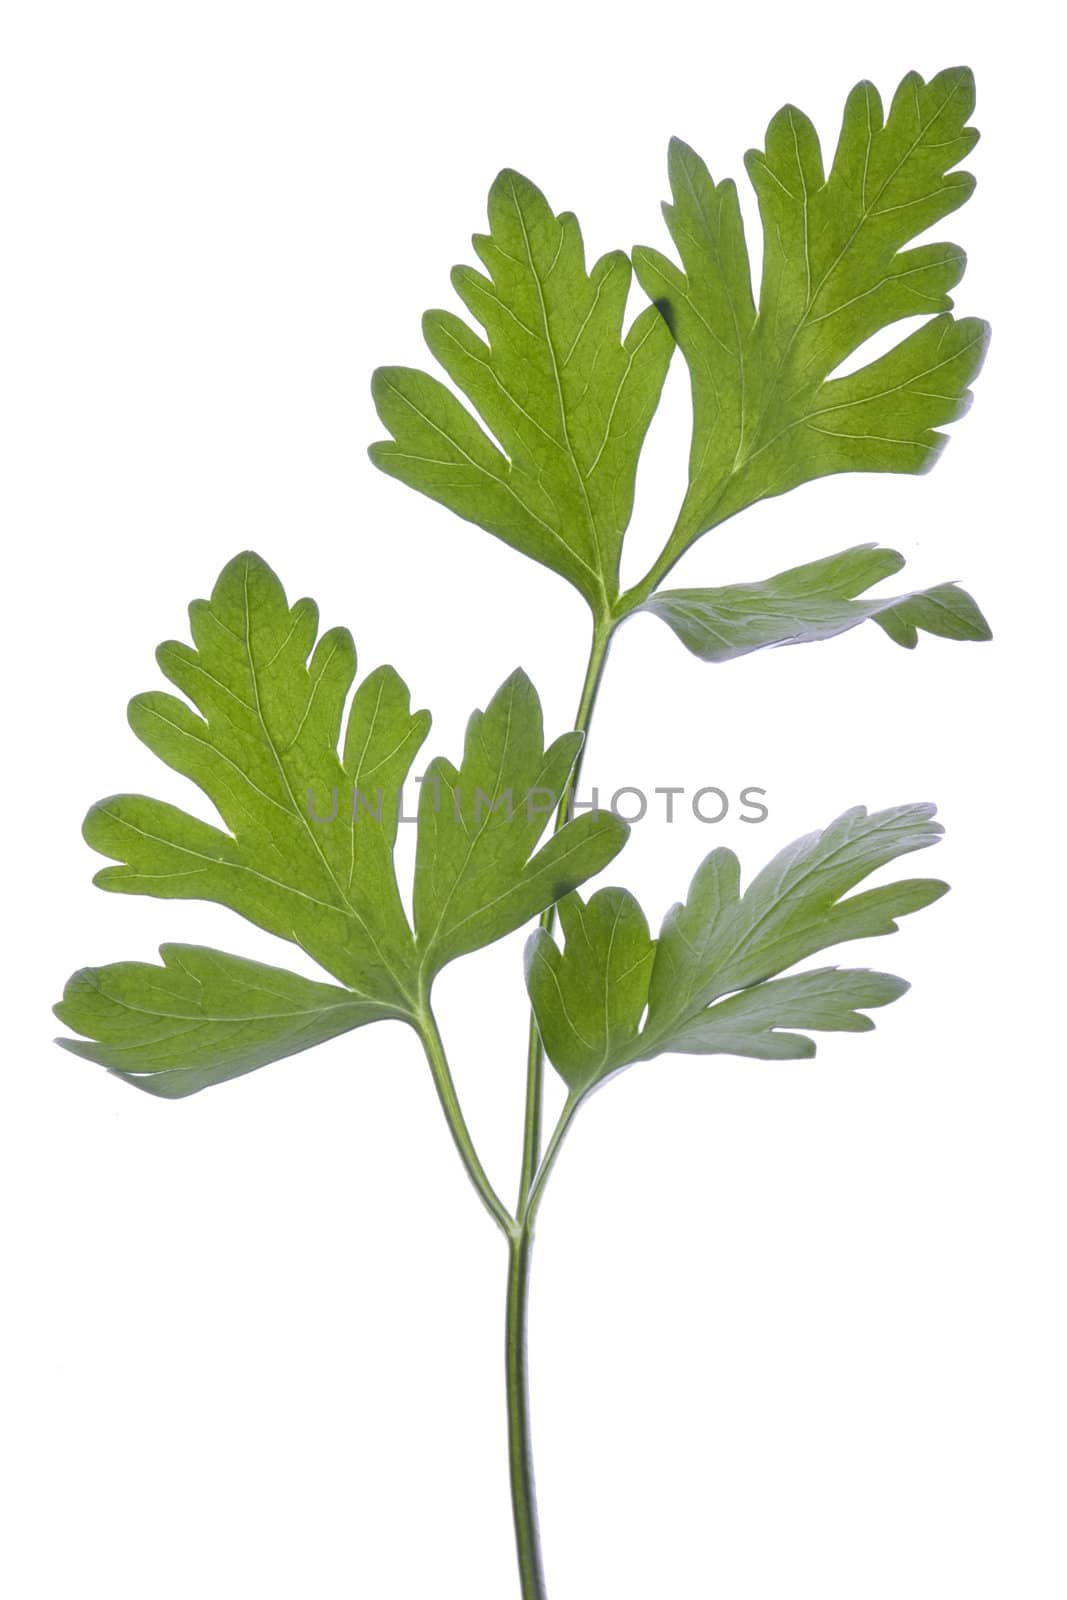 Isolated macro image of italian parsley leaves.